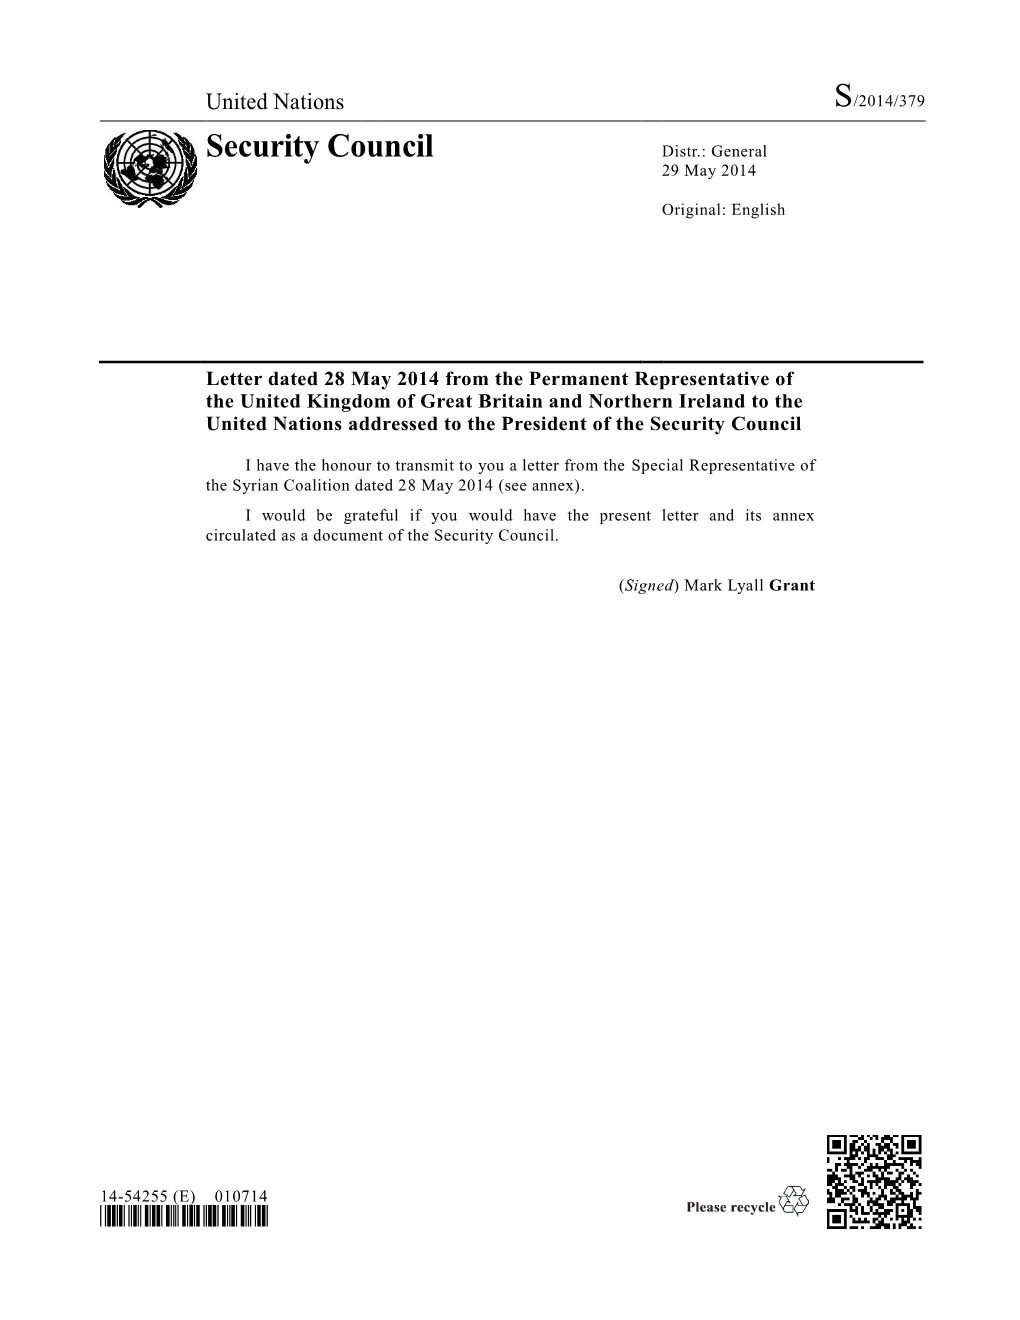 Security Council Distr.: General 29 May 2014